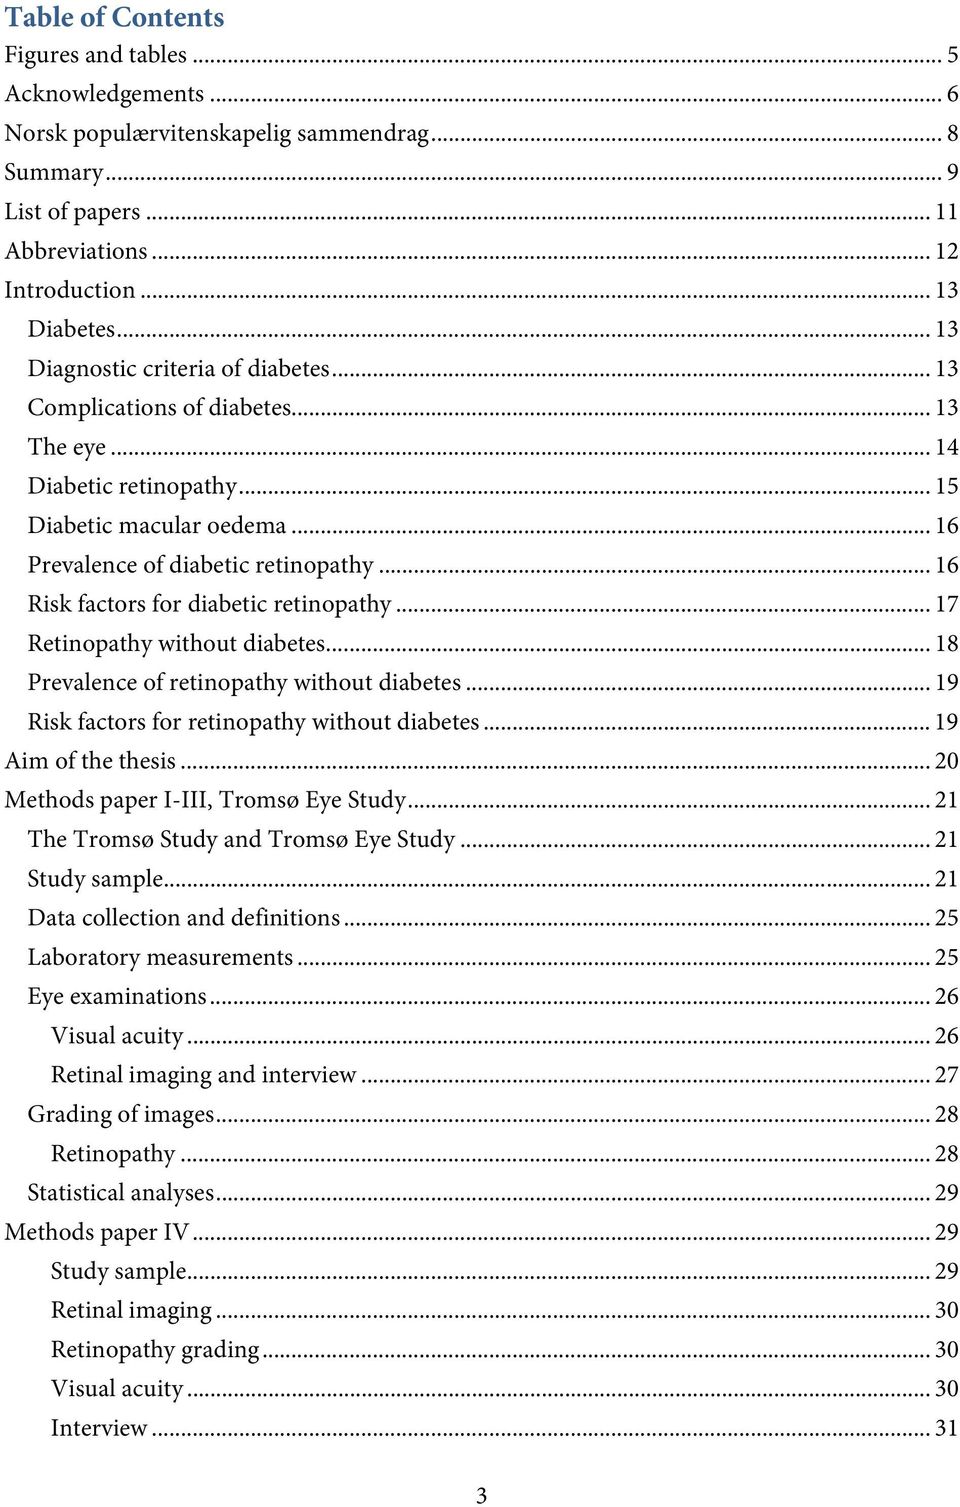 .. 16 Risk fators for diabeti retinopathy... 17 Retinopathy without diabetes... 18 Prevalene of retinopathy without diabetes... 19 Risk fators for retinopathy without diabetes... 19 Aim of the thesis.